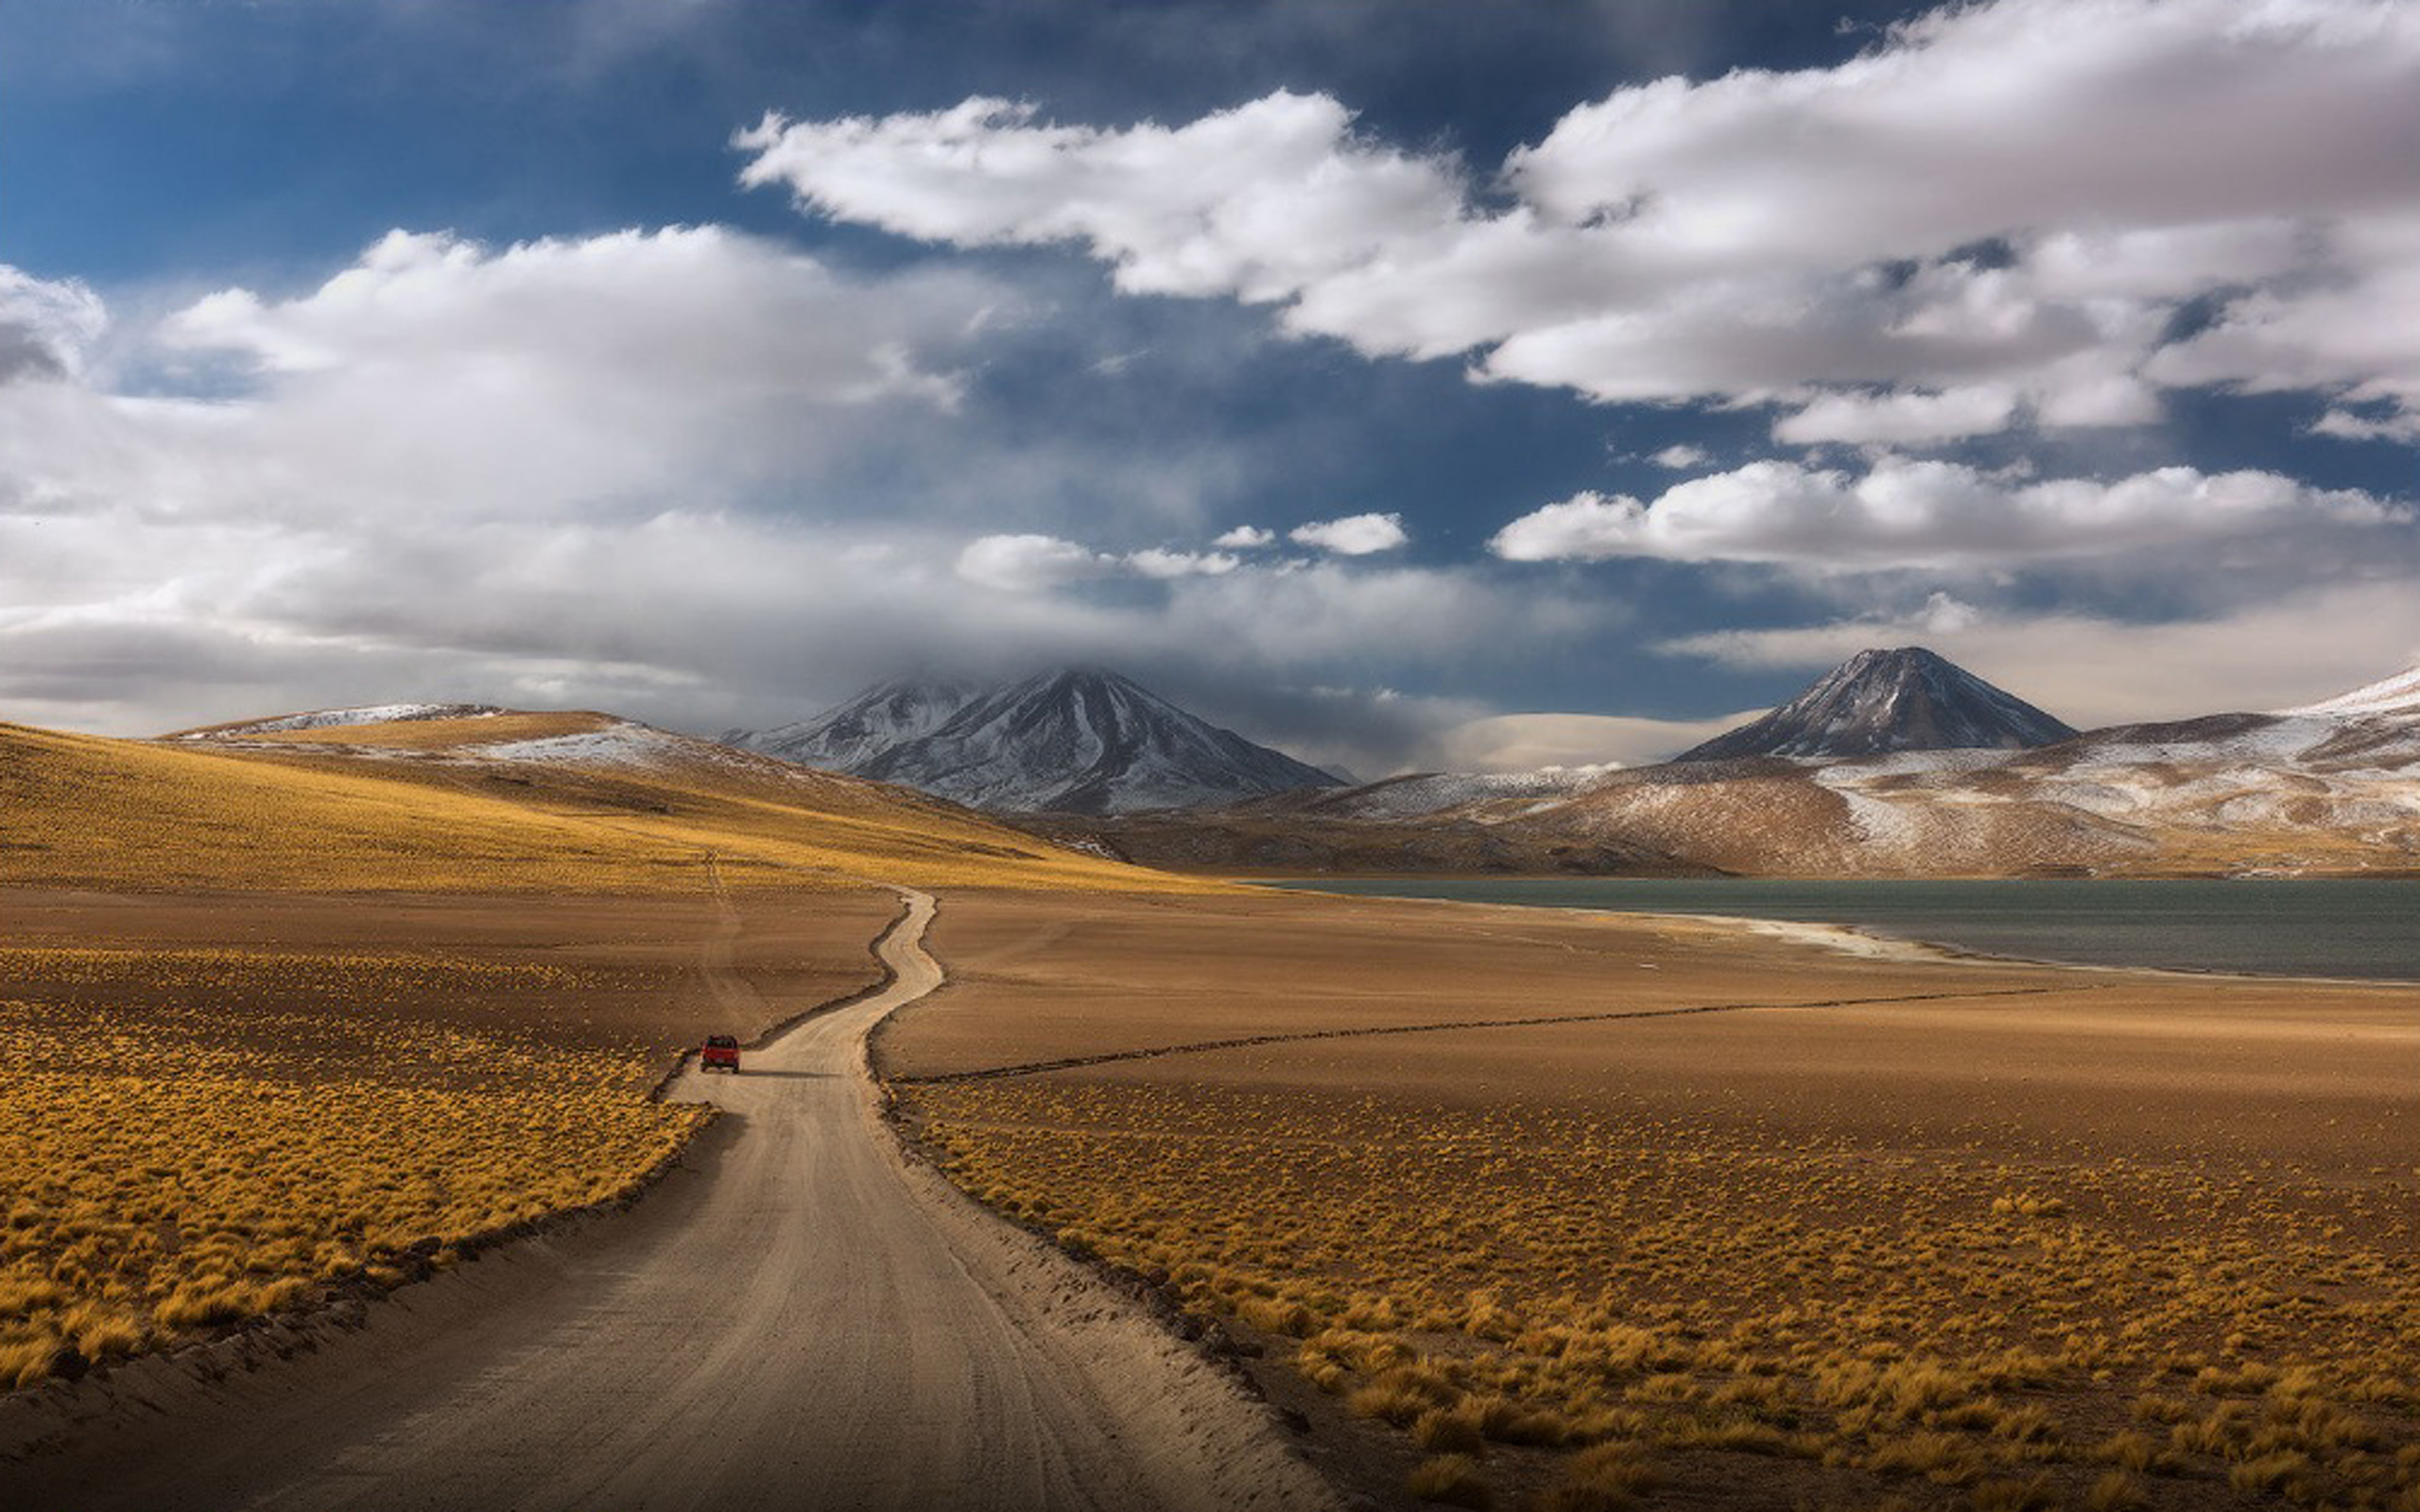 Deserts Waycama Desert In Chile Desktop Wallpaper